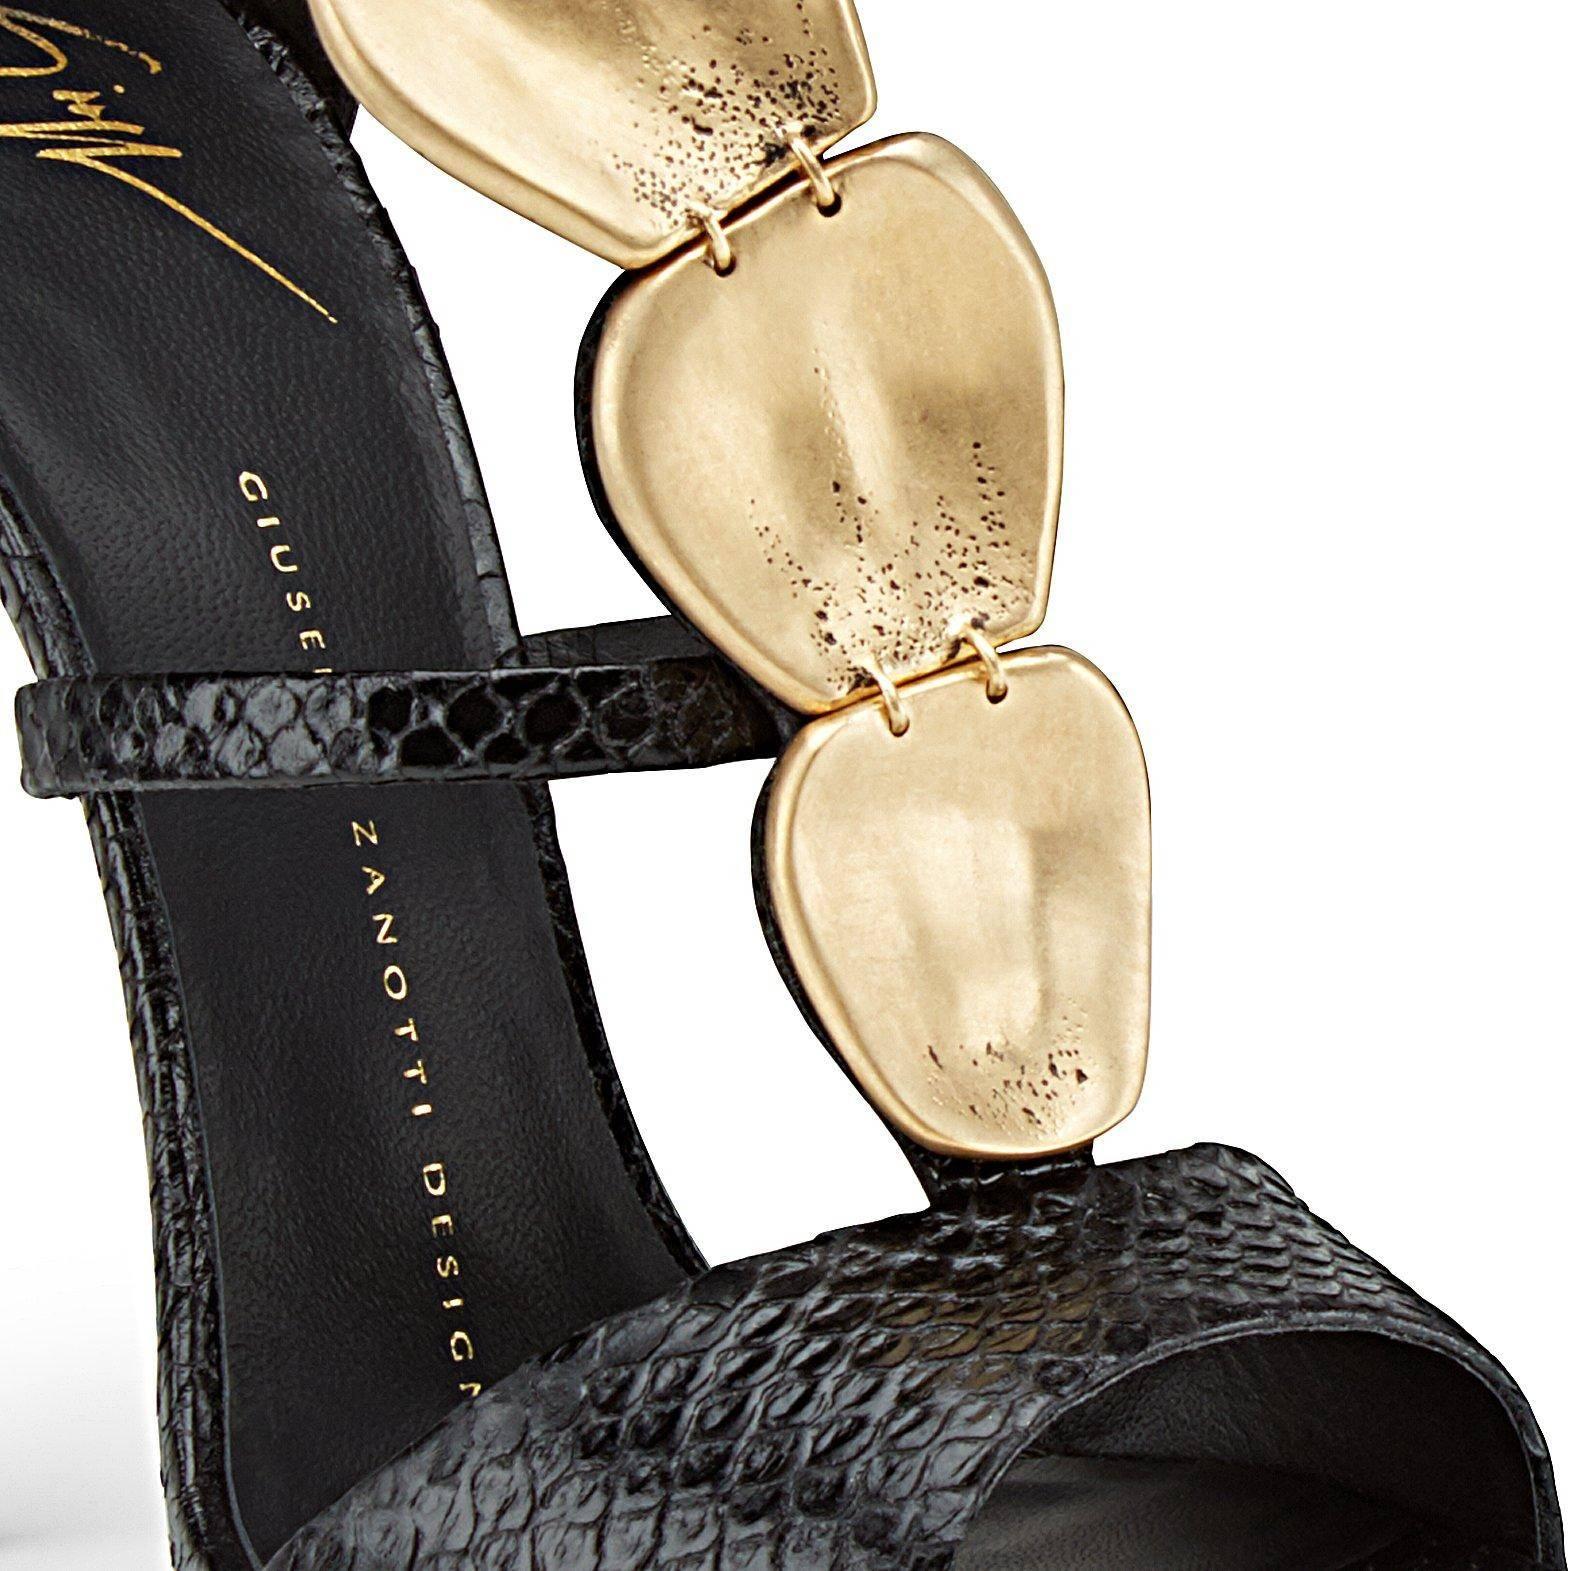 LAST PAIR! Giuseppe Zanotti New Black Lizard Gold Evening Sandals Heels in Box

Size IT 36
Lizard leather
Gold tone hardware
Zipper back closure
Made in Italy
Heel height 4.75